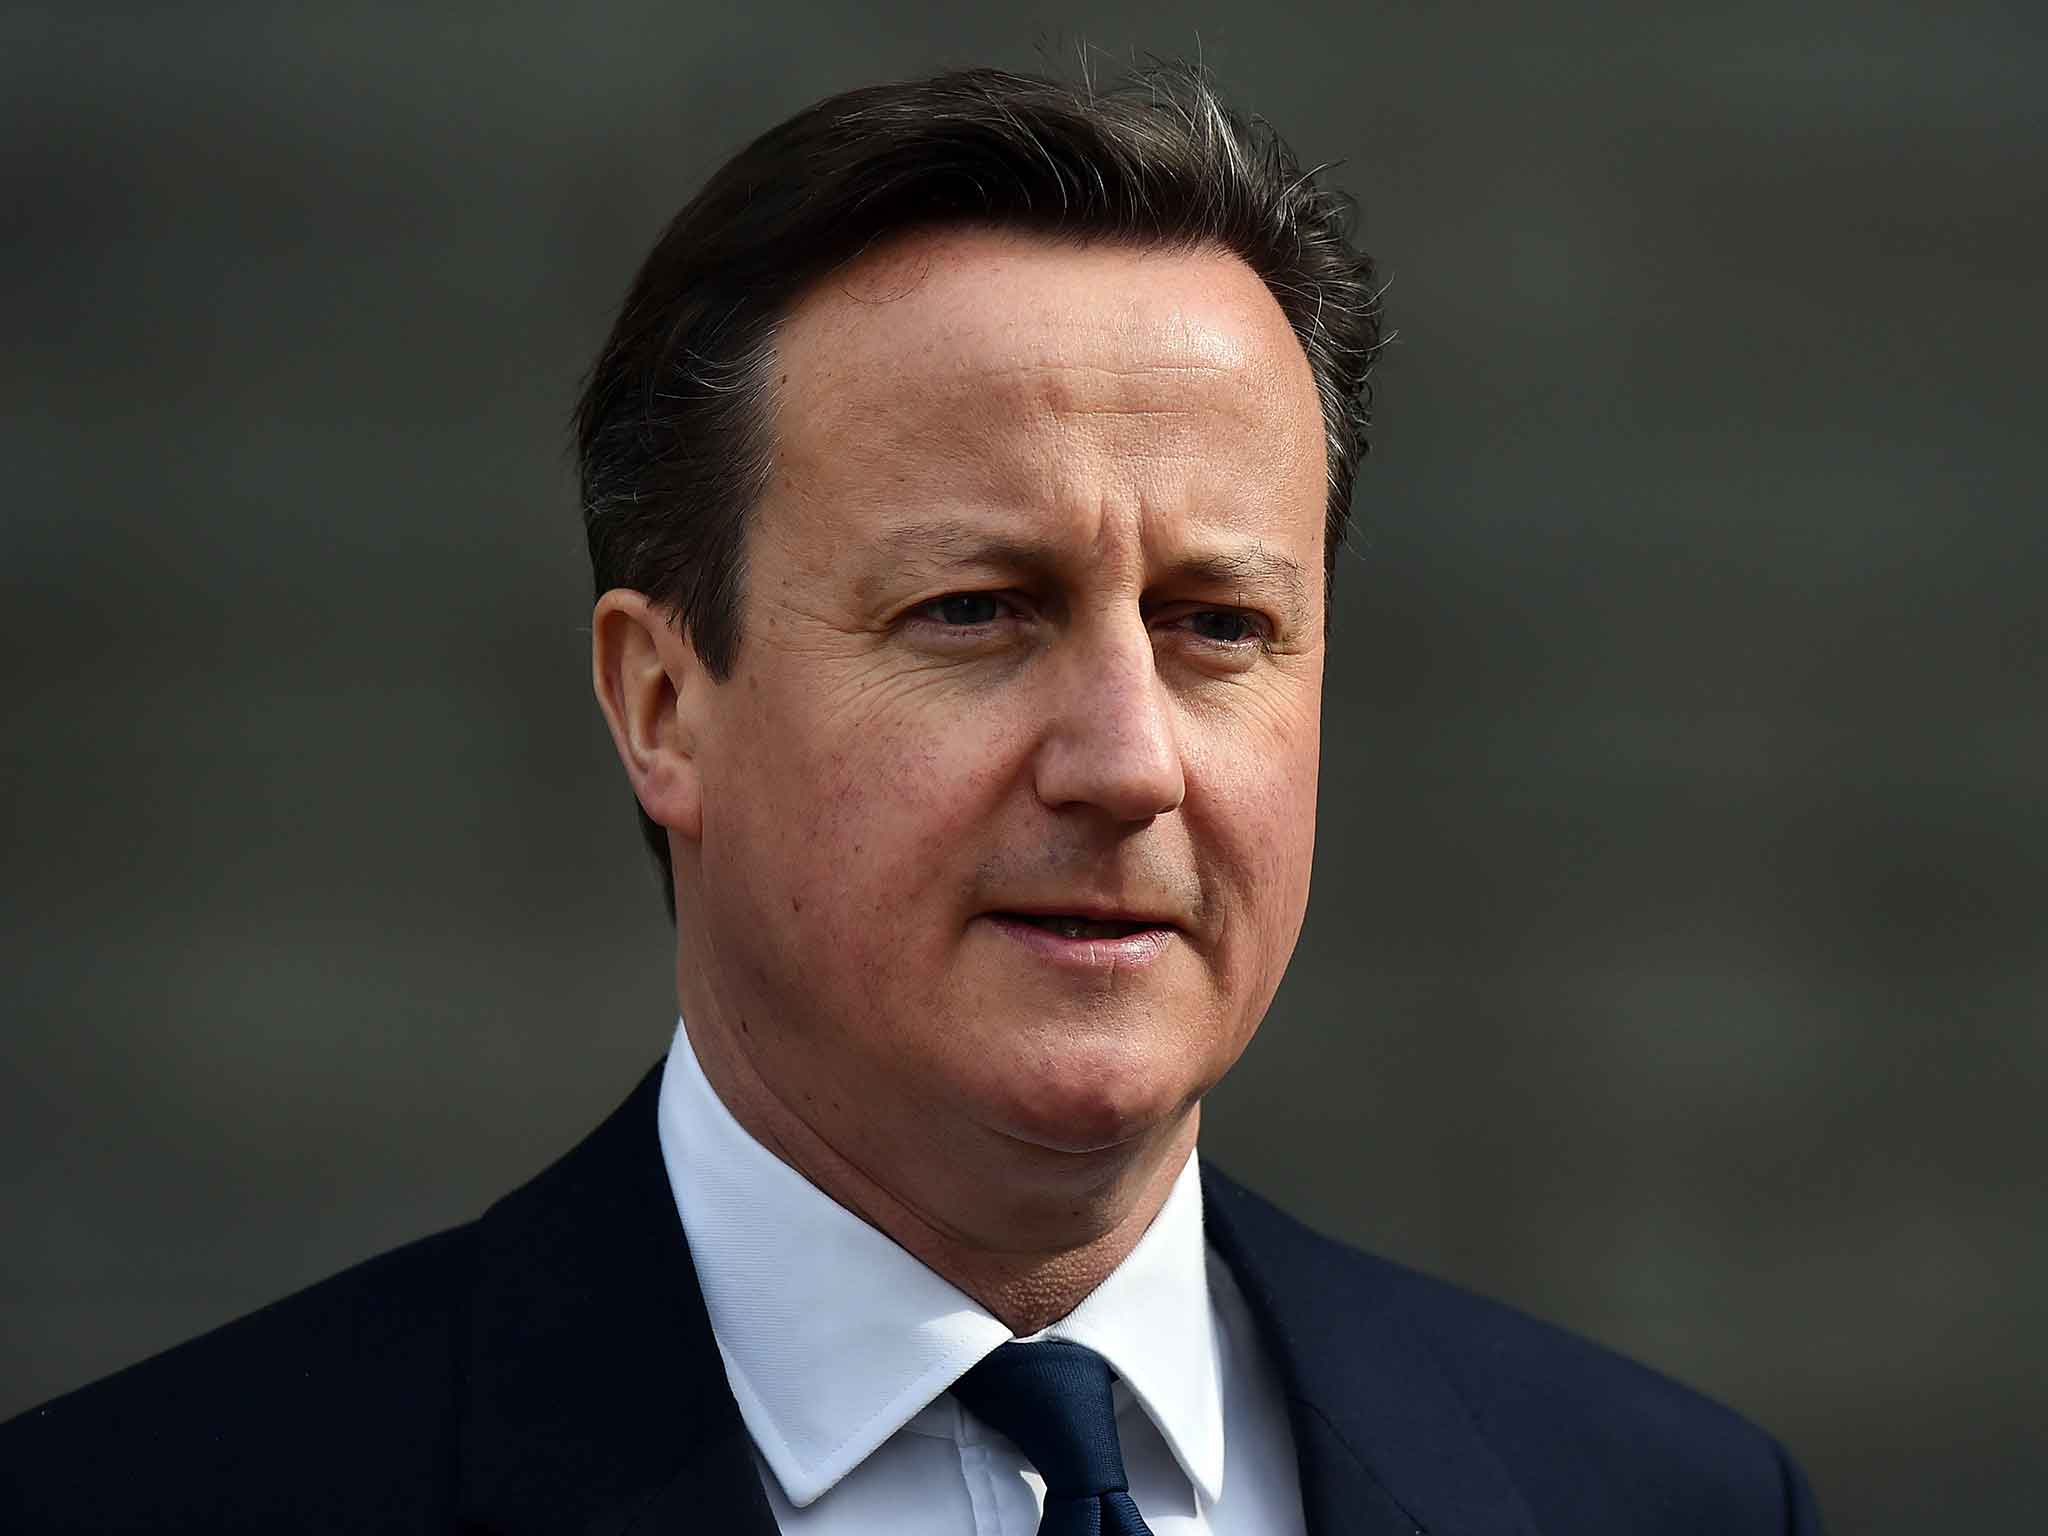 David Cameron called President Assad a 'butcher'